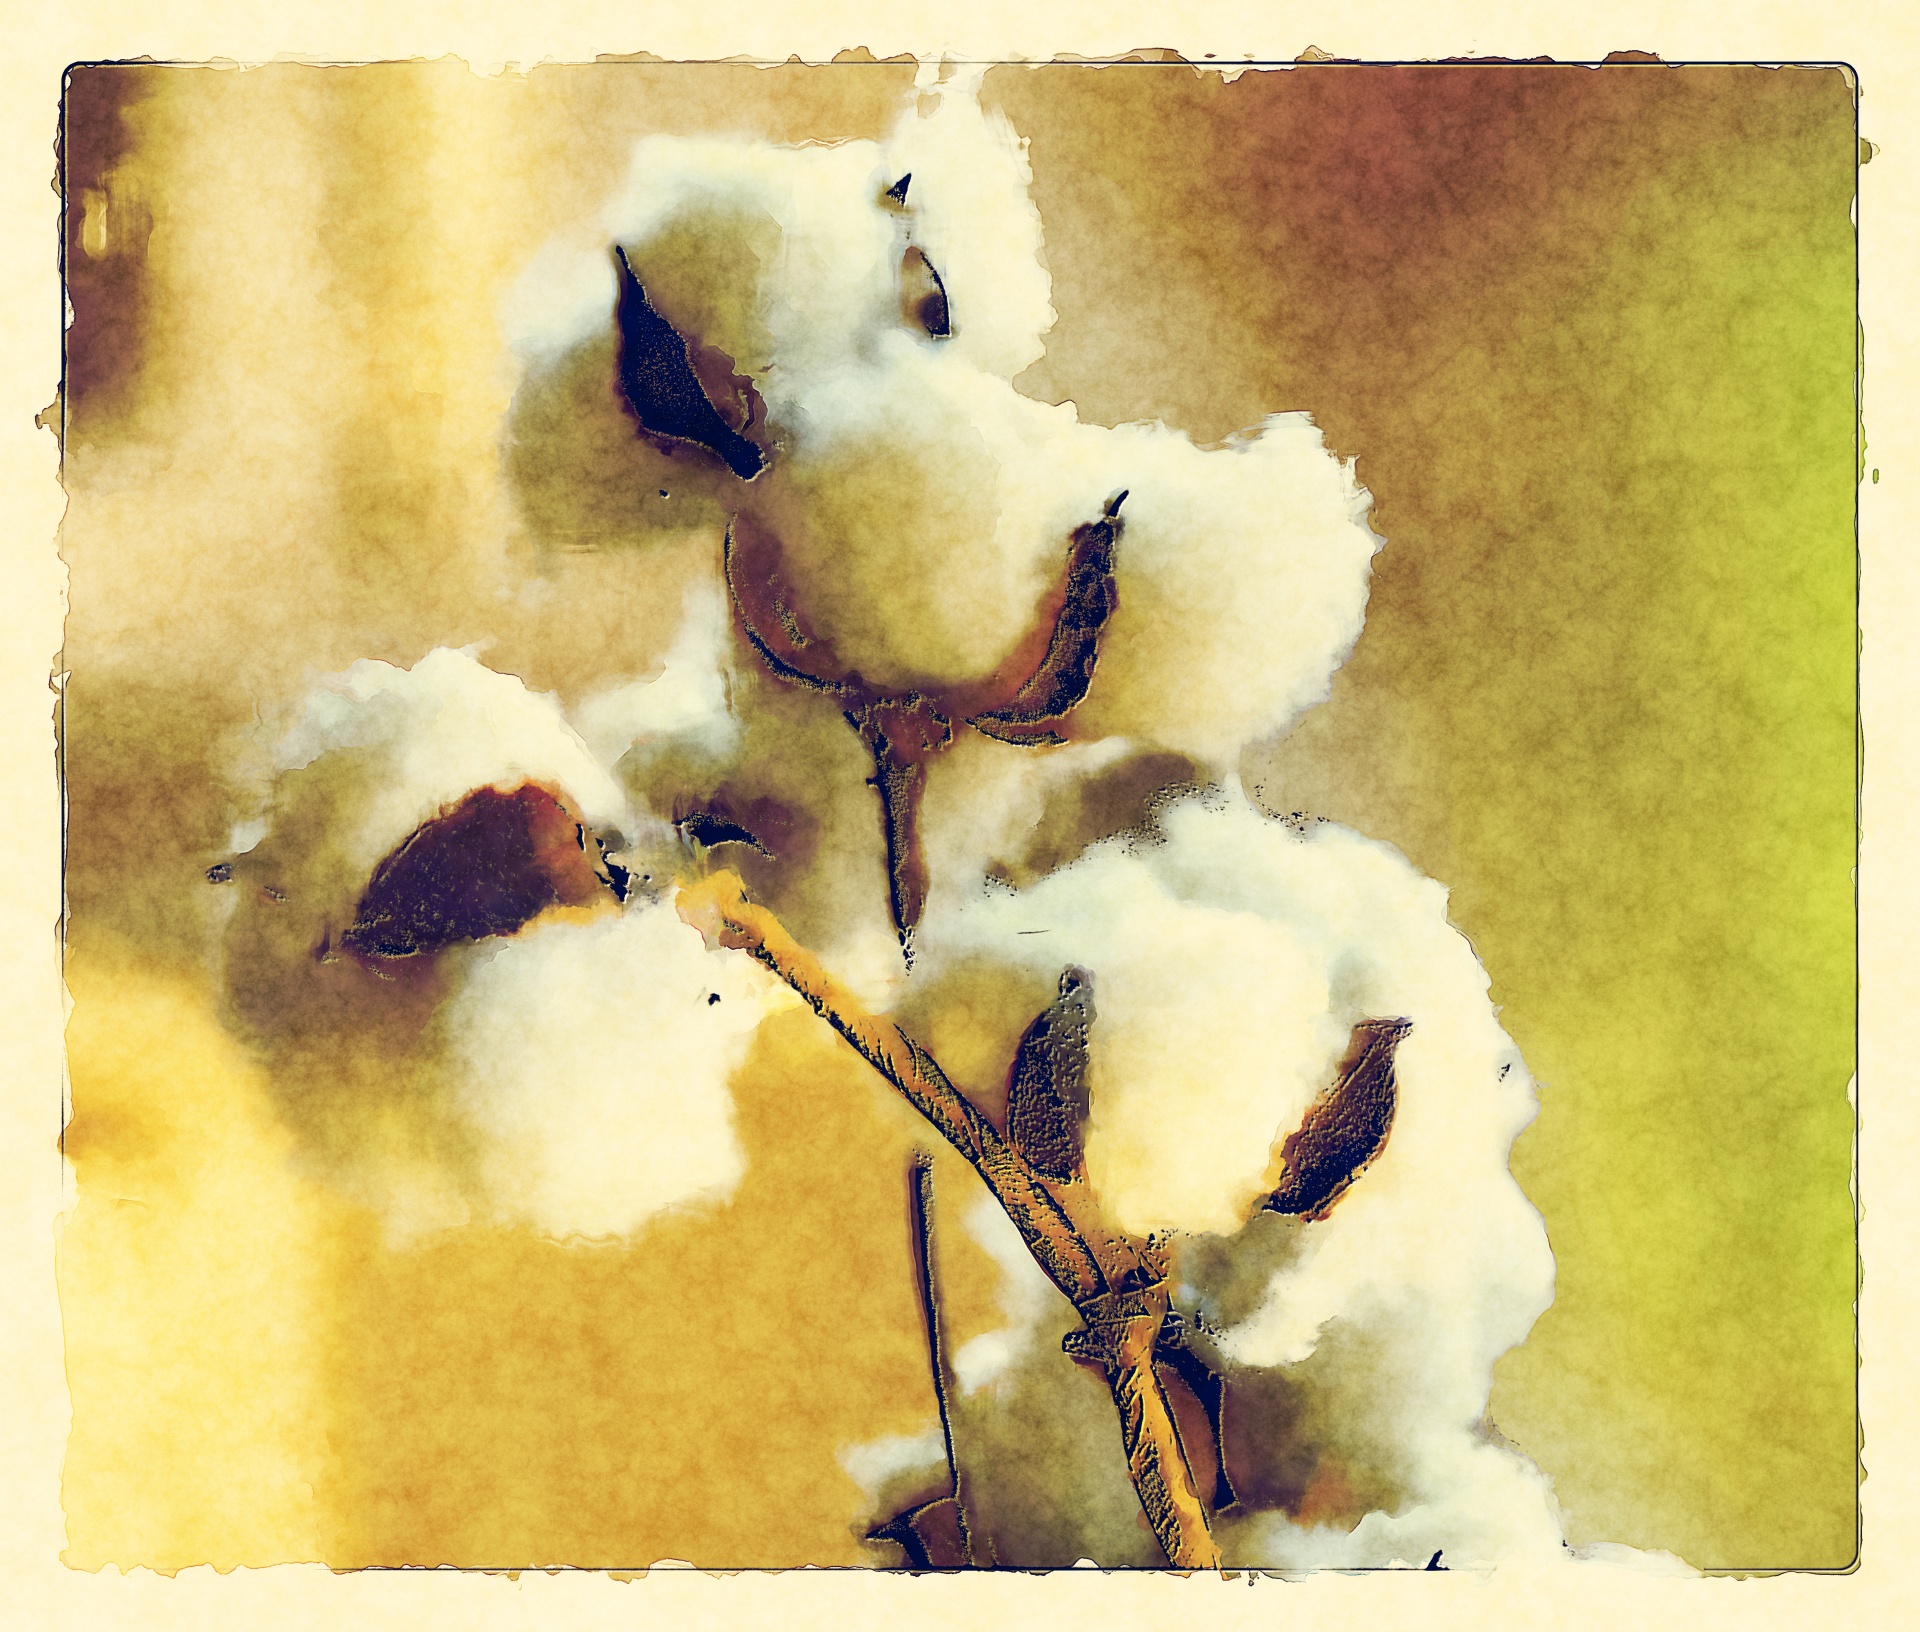 artistic rendering of unpicked cotton